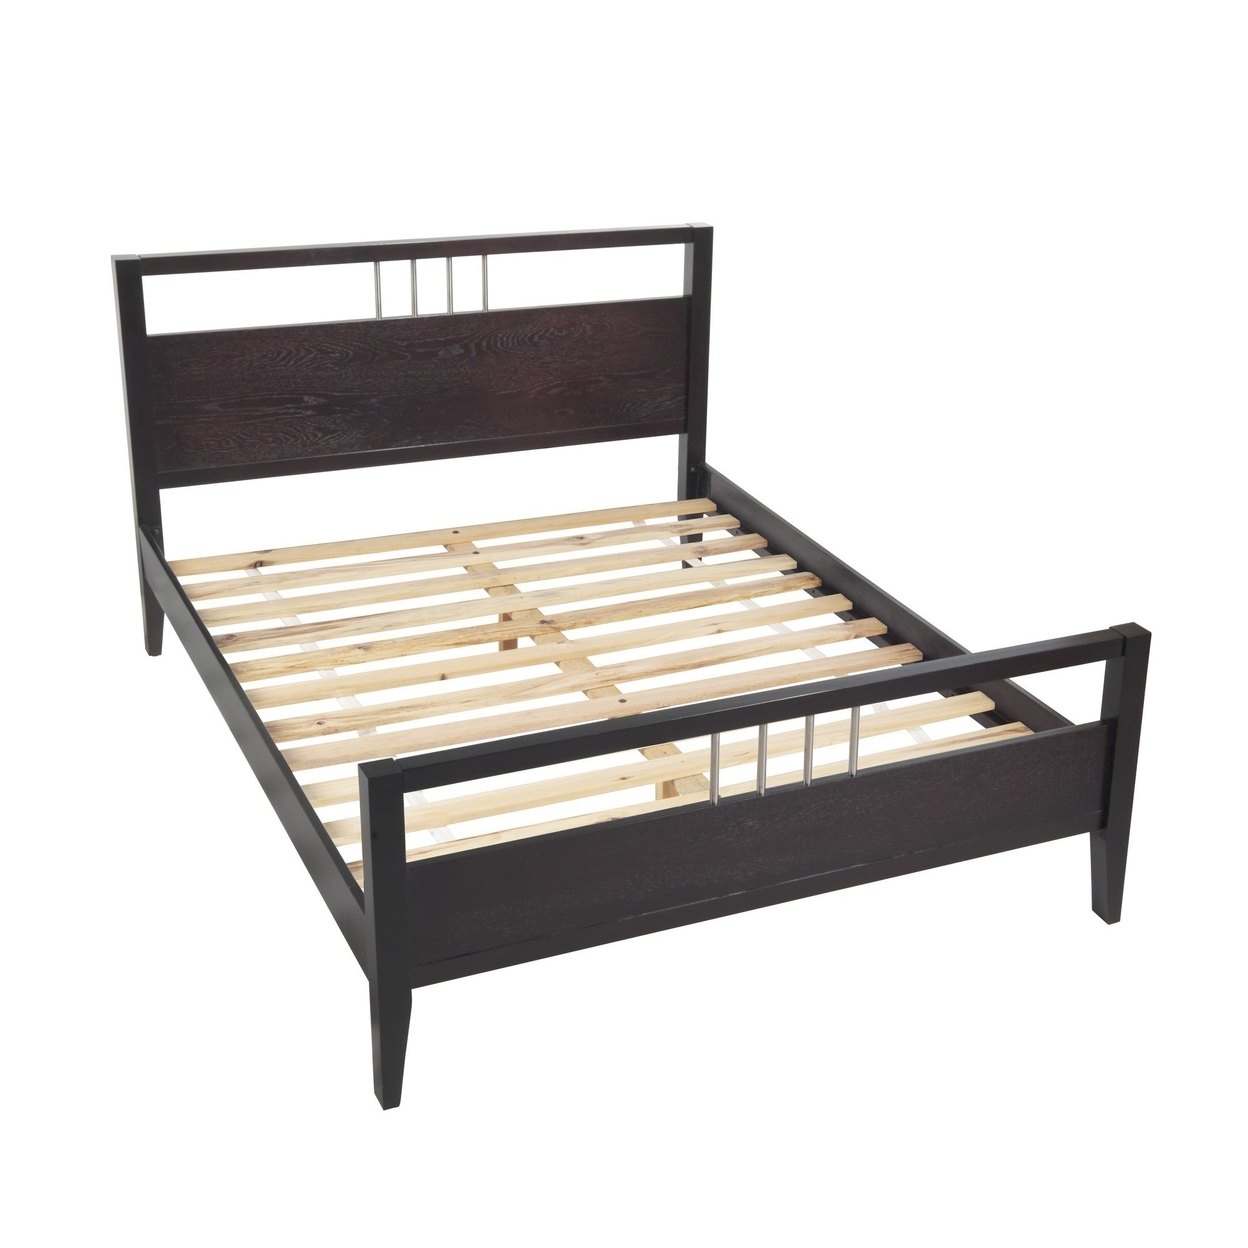 Fang Modern Twin Size Bed, Sleigh Headboard, Metal Bars, Espresso Brown - Saltoro Sherpi